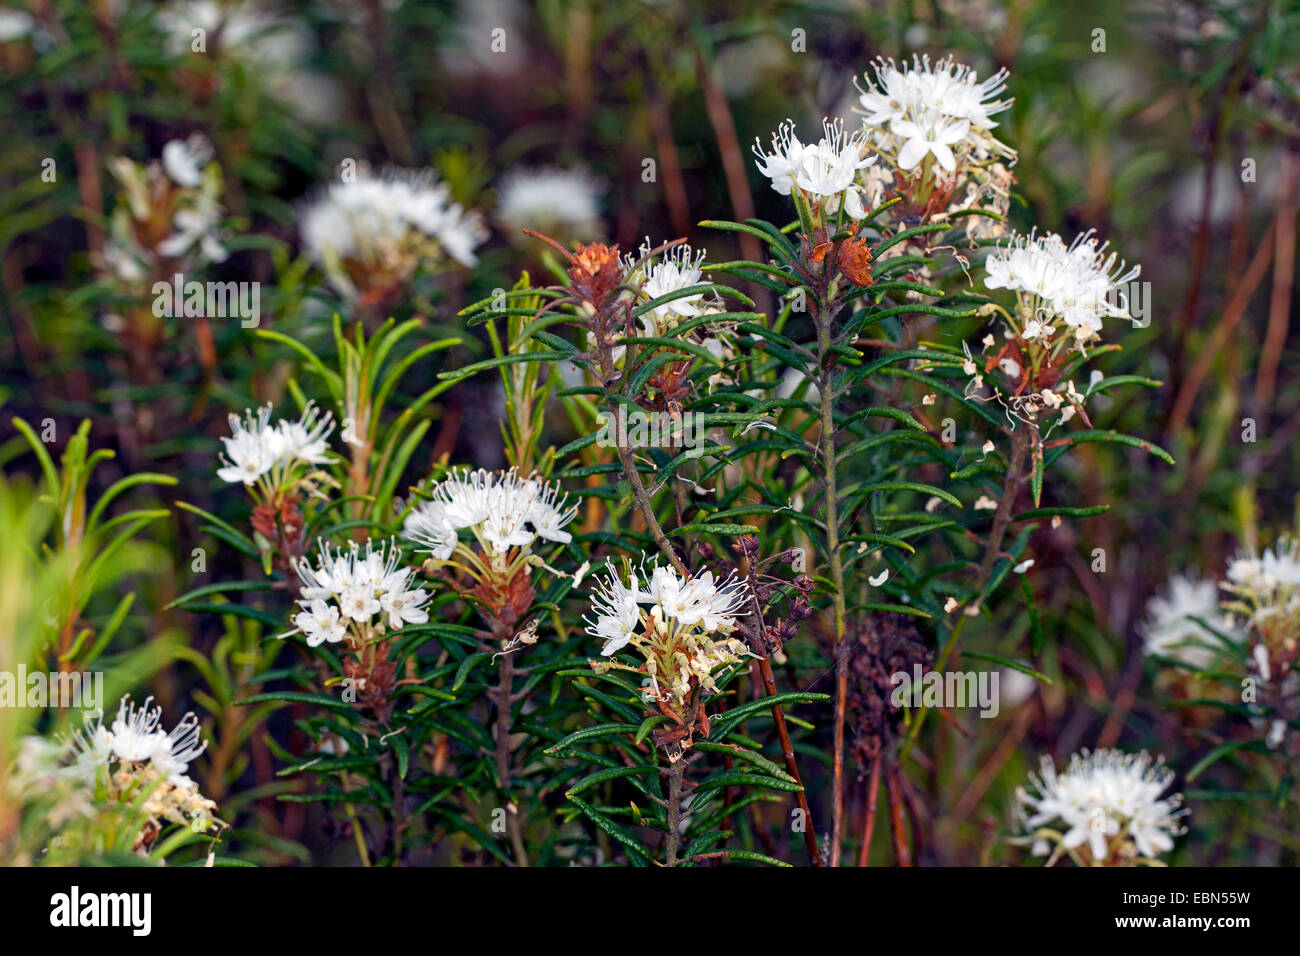 Wild Rosemary, Marsh Labrador tea, northern Labrador tea (Ledum palustre, Rhododendron tomentosum, Rhododendron palustre), blooming, Germany Stock Photo